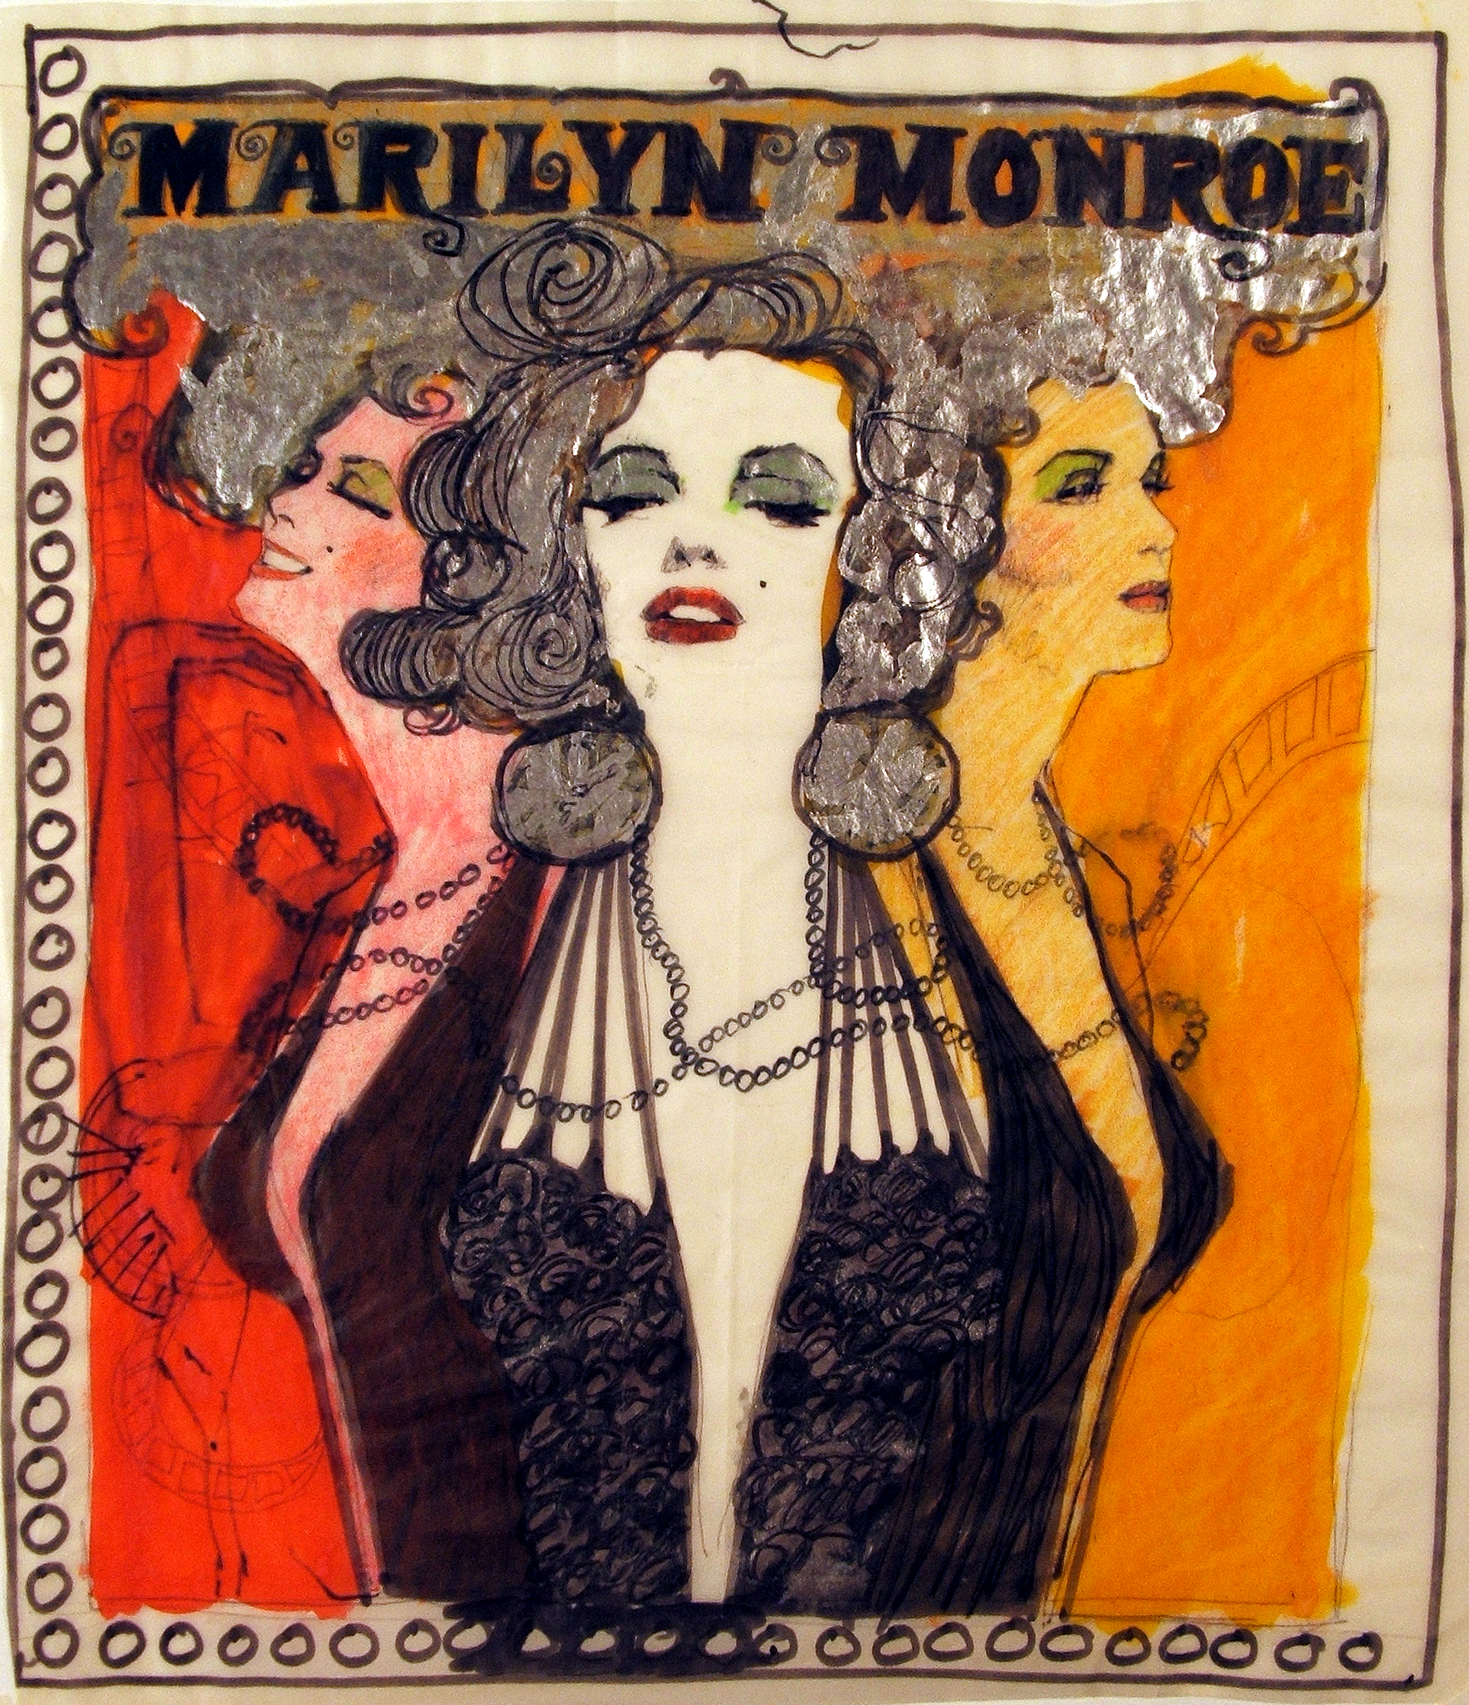 the Marilyn Monroe artwork